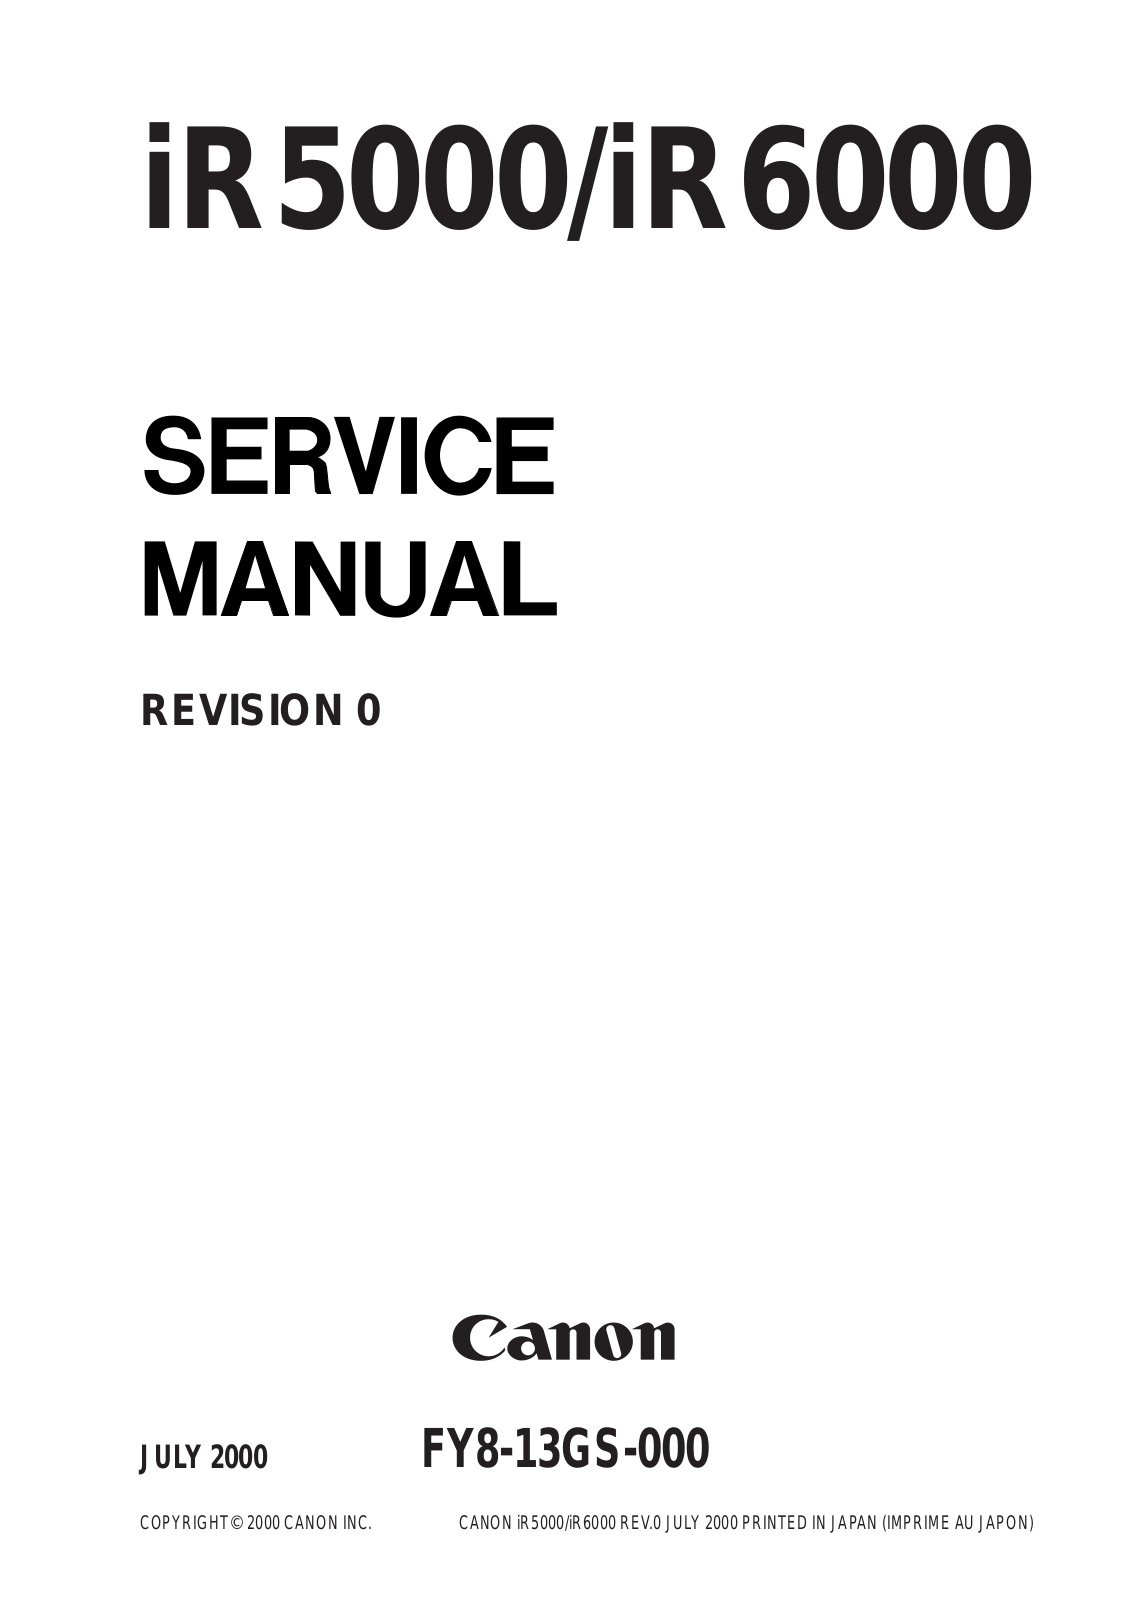 Canon imageRUNNER 5000, imageRUNNER 6000 Service Manual